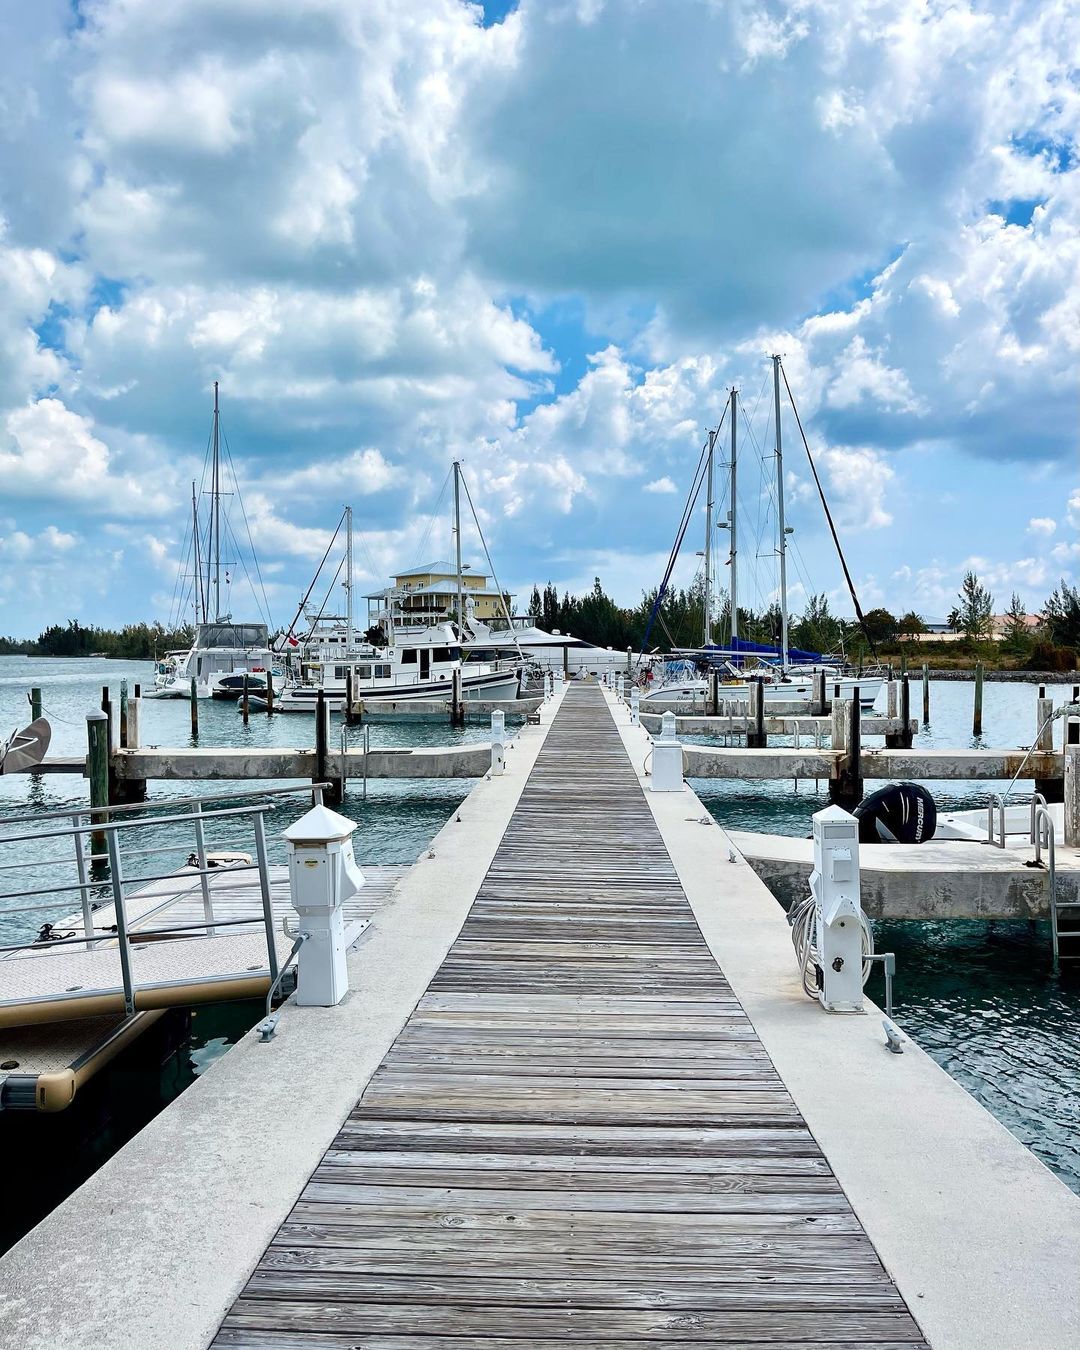 docks of the Grand Bahama Yacht Club